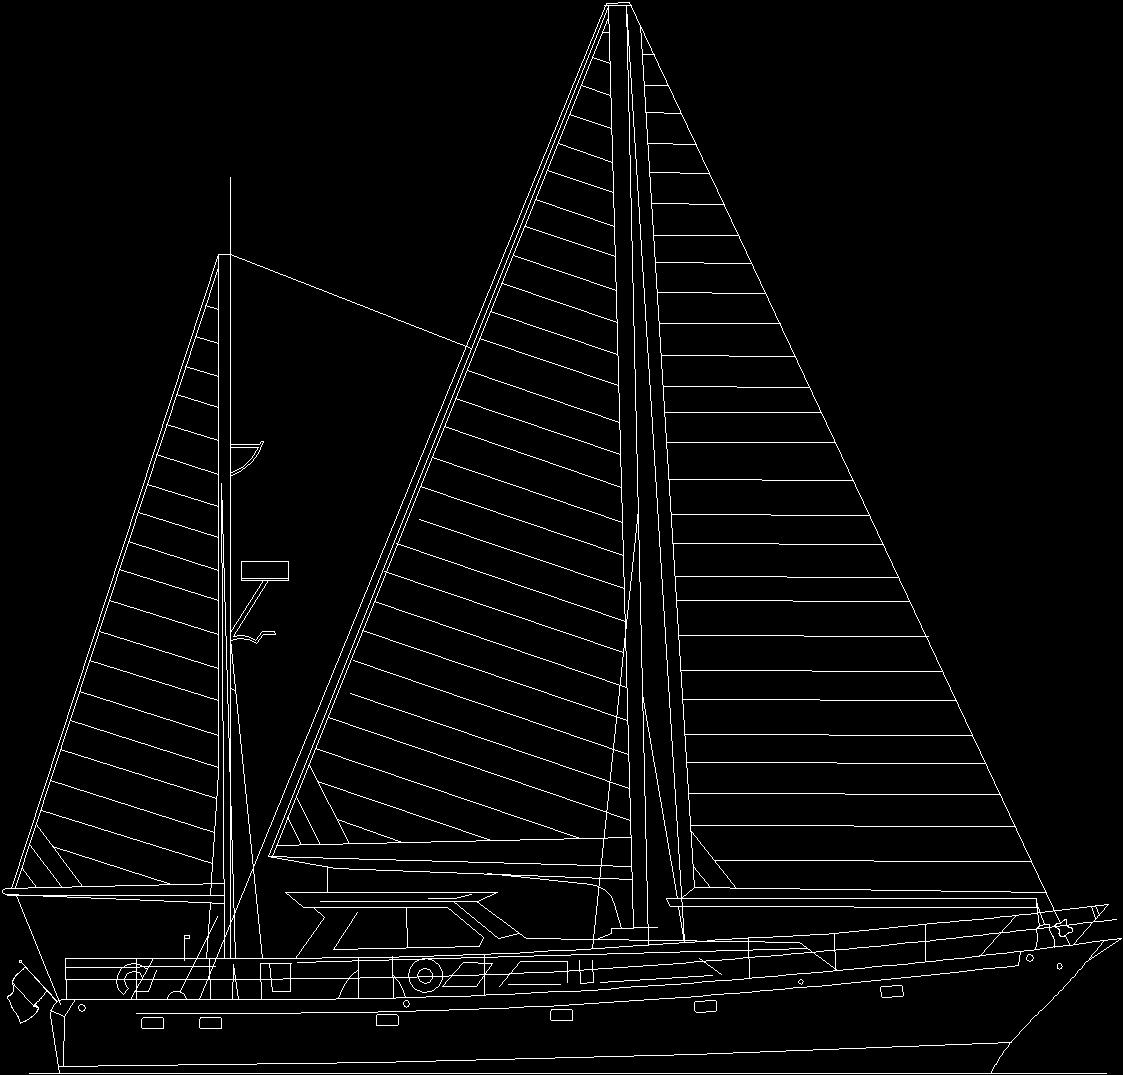 autocad yacht design